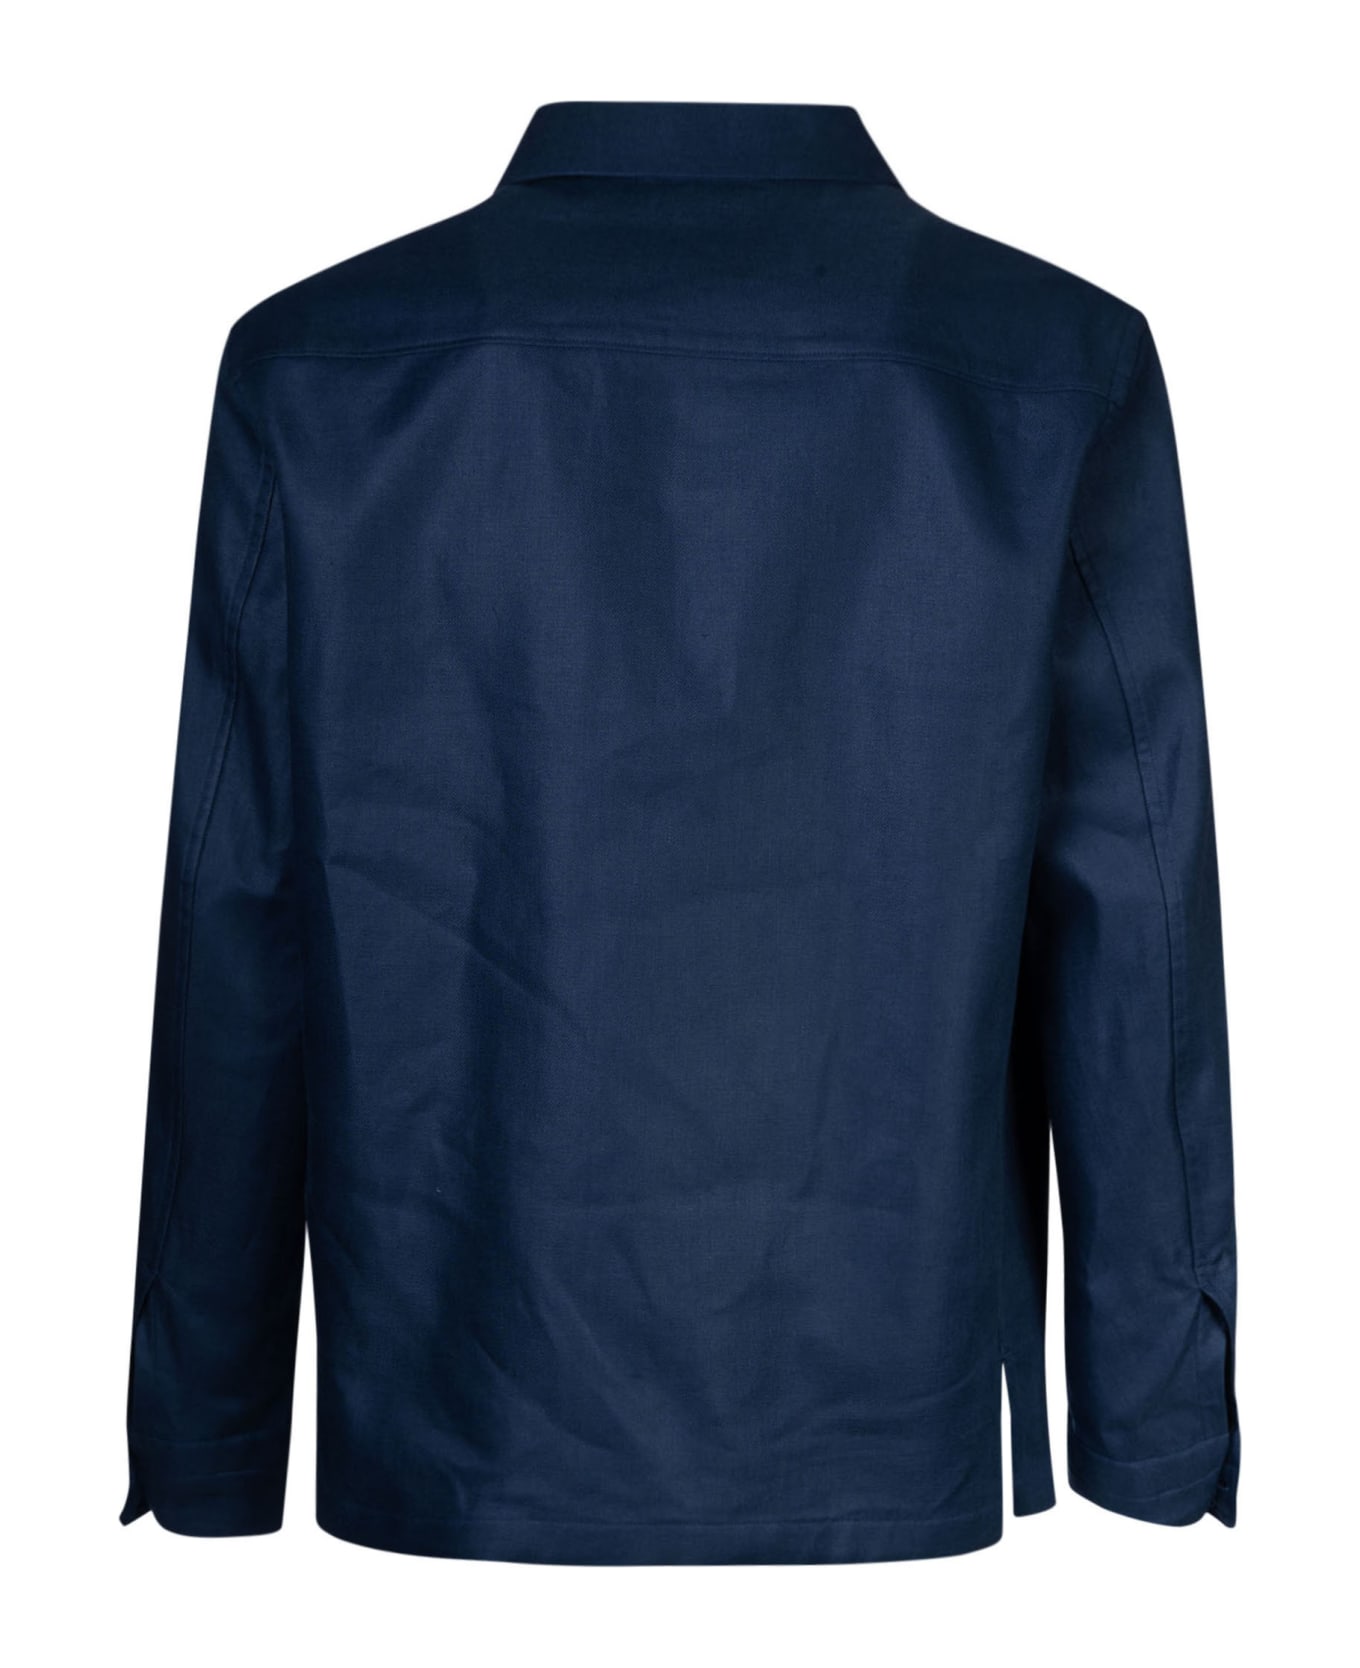 Zegna Cargo Buttoned Shirt - C